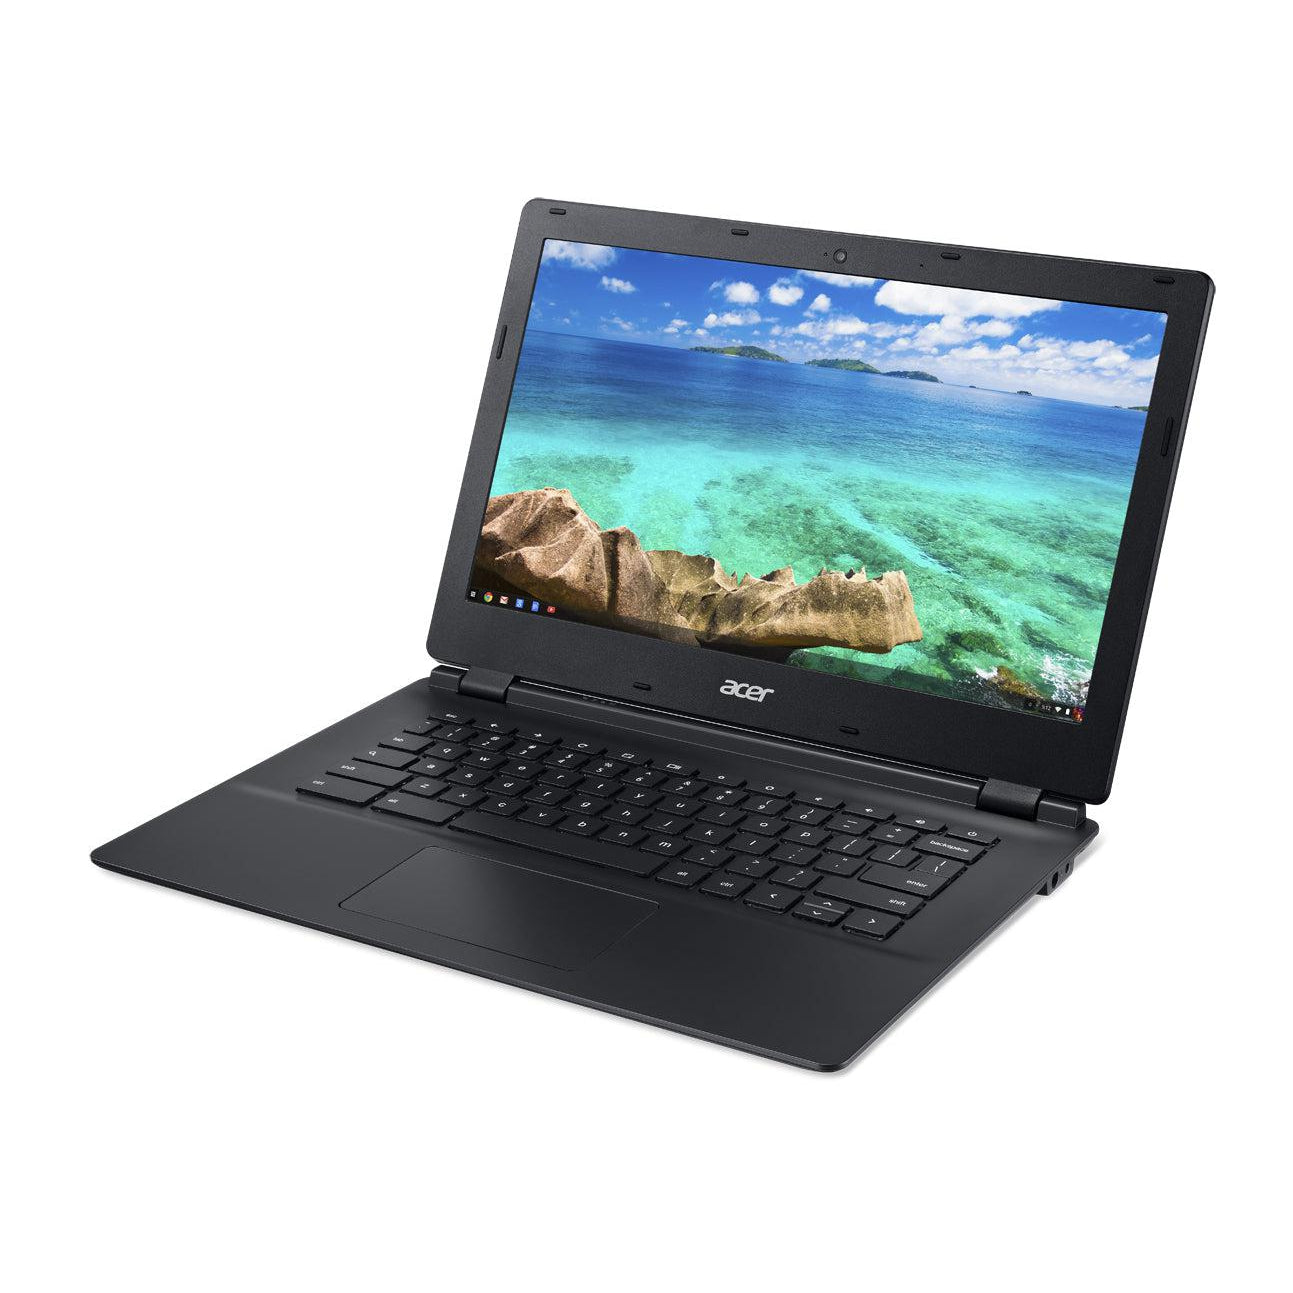 Acer Chromebook 13 C810-T7FP - 13.3" Tegra K1 CD570M-A1, 4GB RAM, 16GB eMMC (NX.G14EK.005) - Black